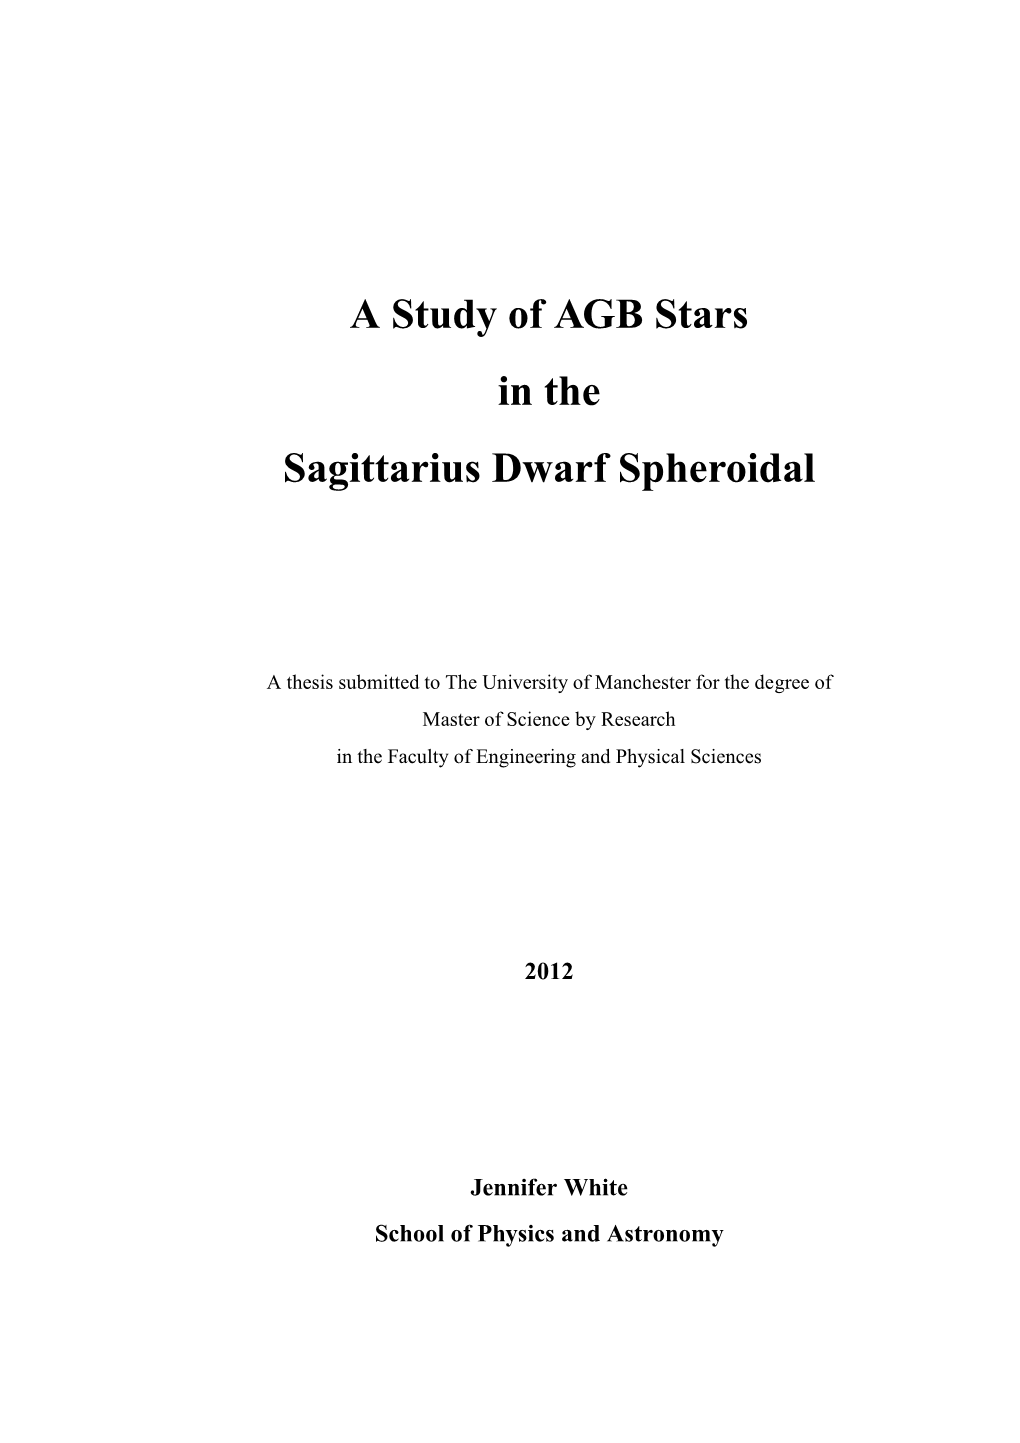 A Study of AGB Stars in the Sagittarius Dwarf Spheroidal